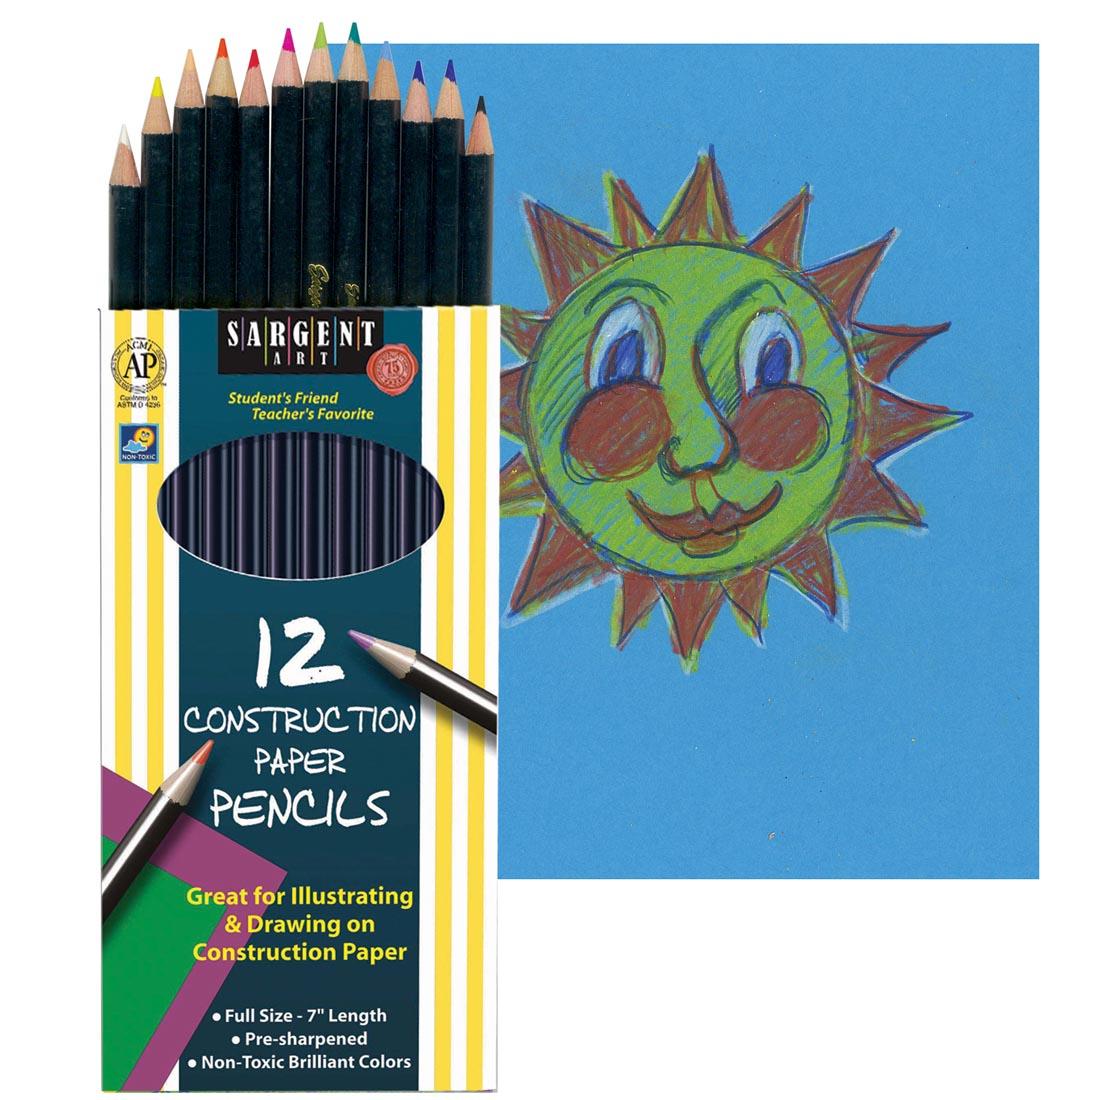 Sargent Art Construction Paper Pencils 12-Color Set beside a drawing of a smiling sun